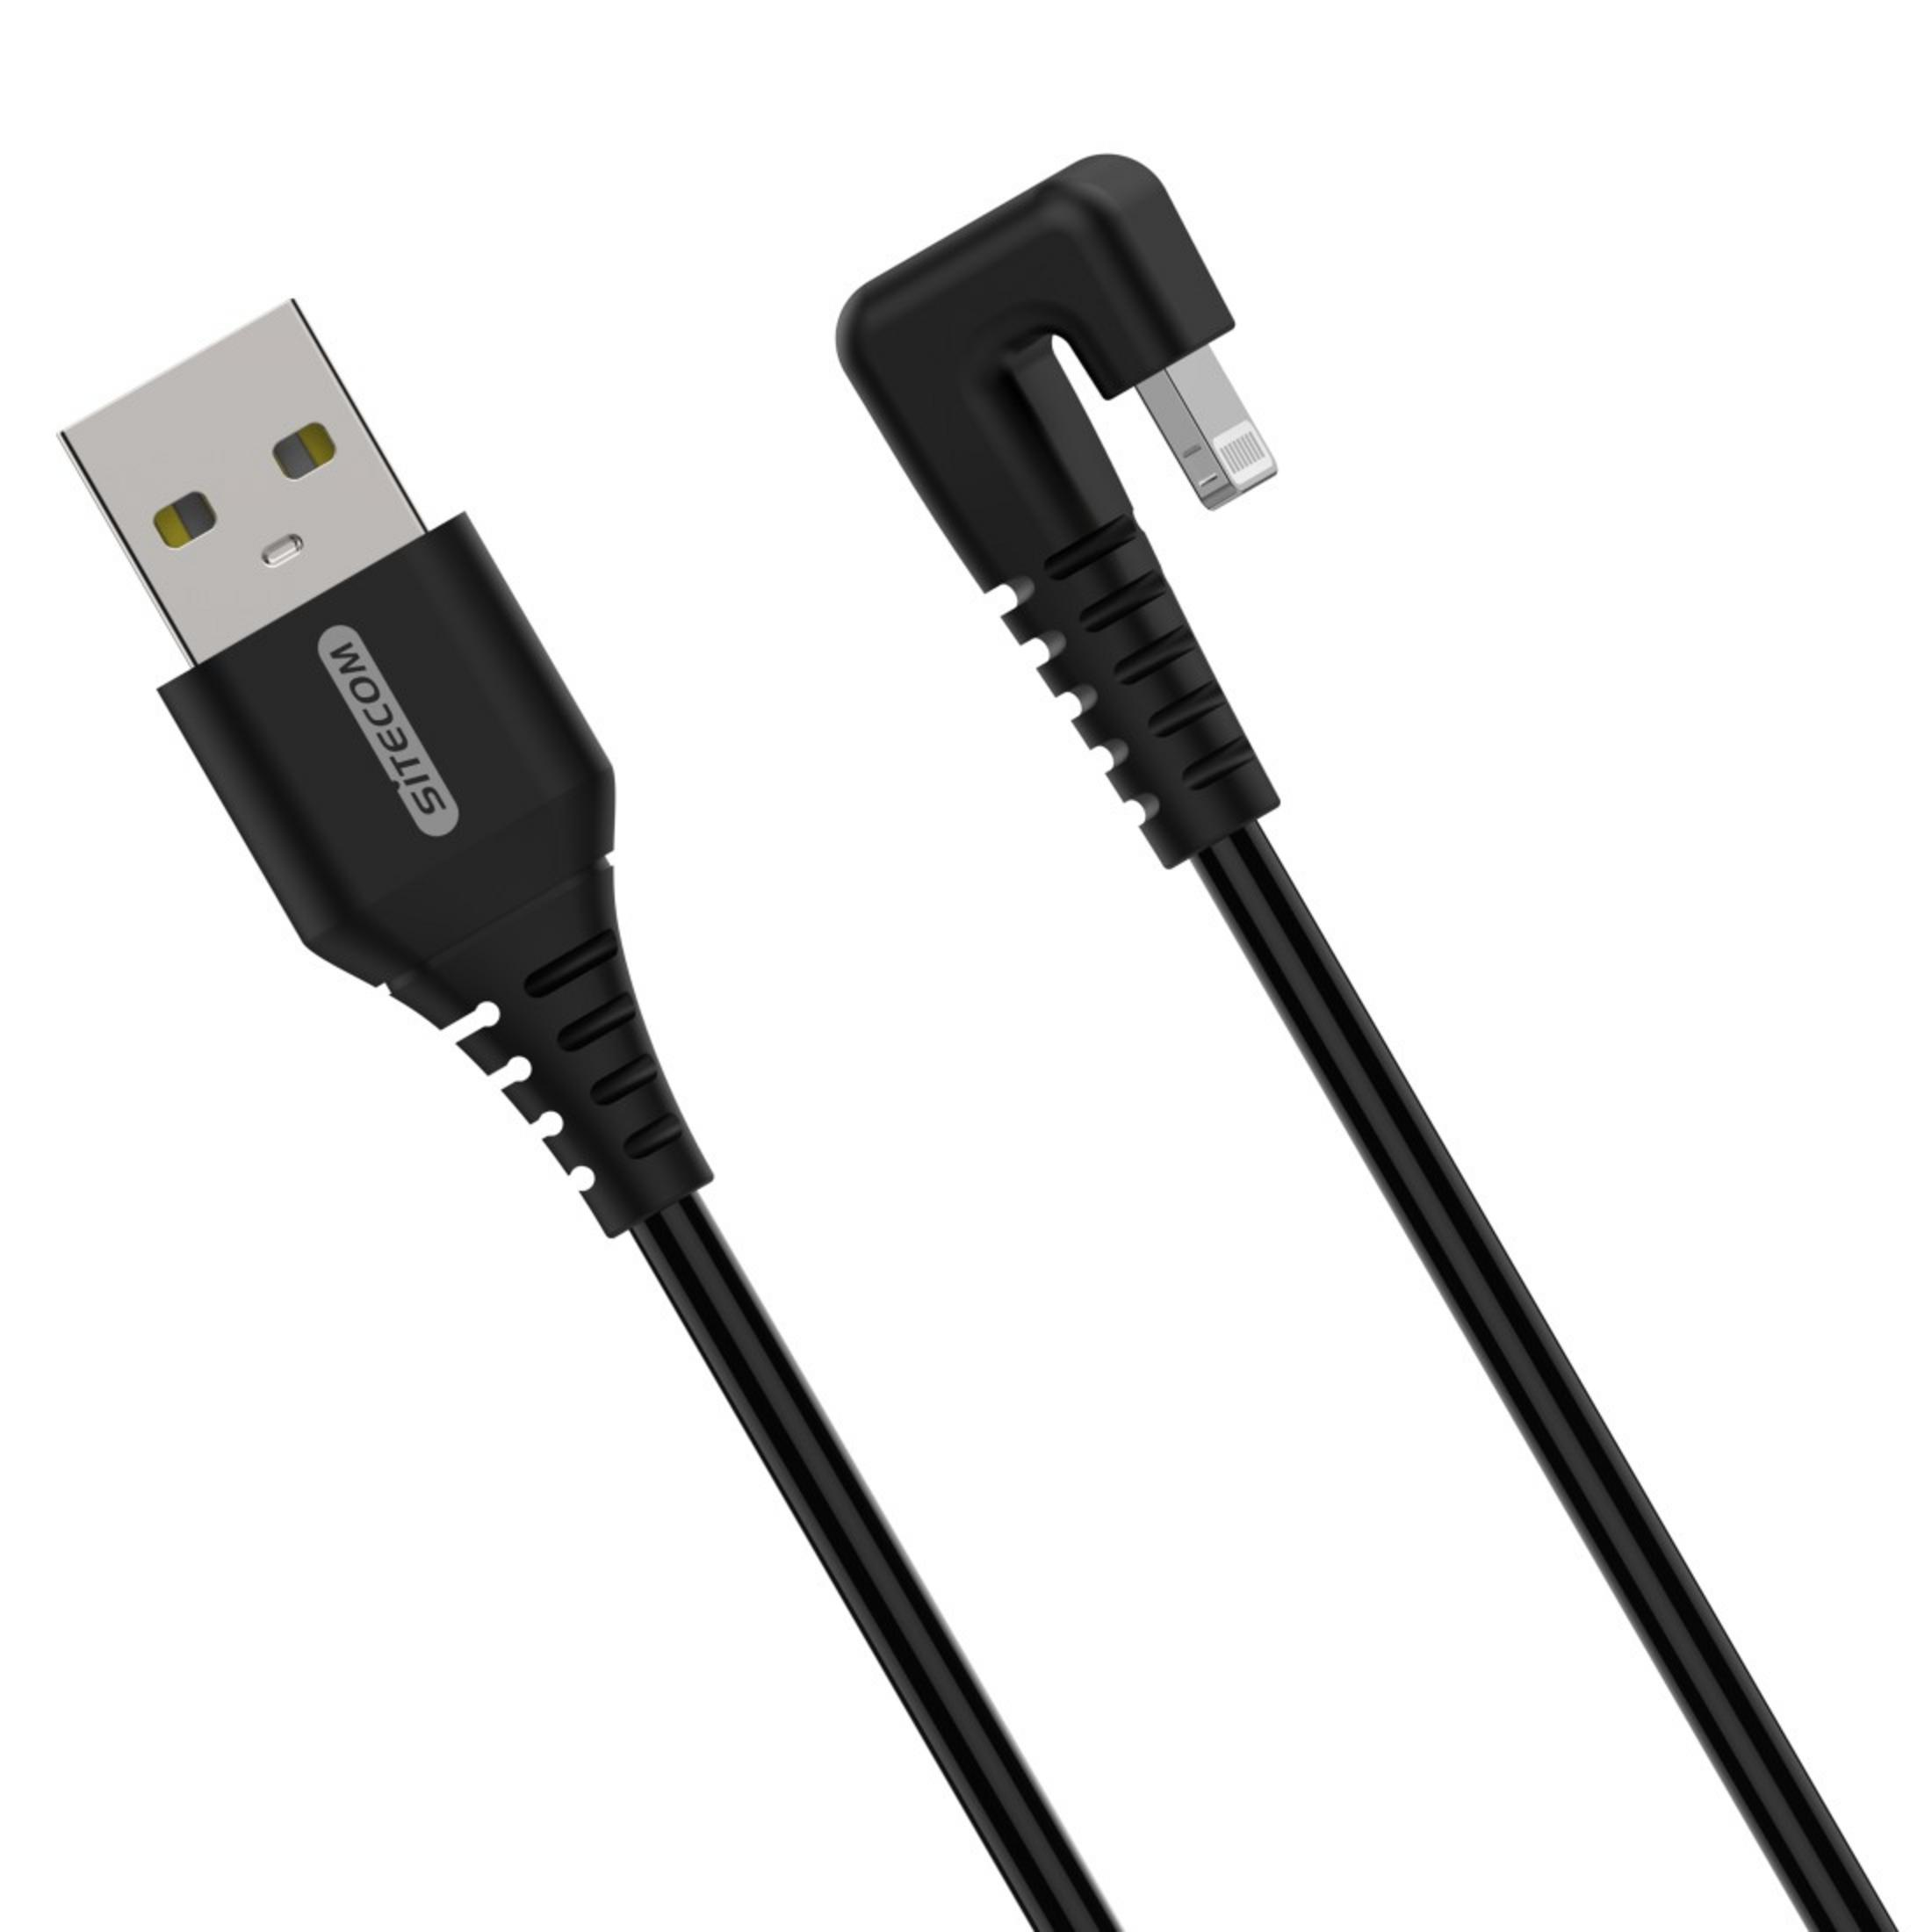 Kabel, Datensynchronisationskabel SITECOM LIGHTN GAME Lightning Lade- CA-039 TO und USB USB-A 2.0